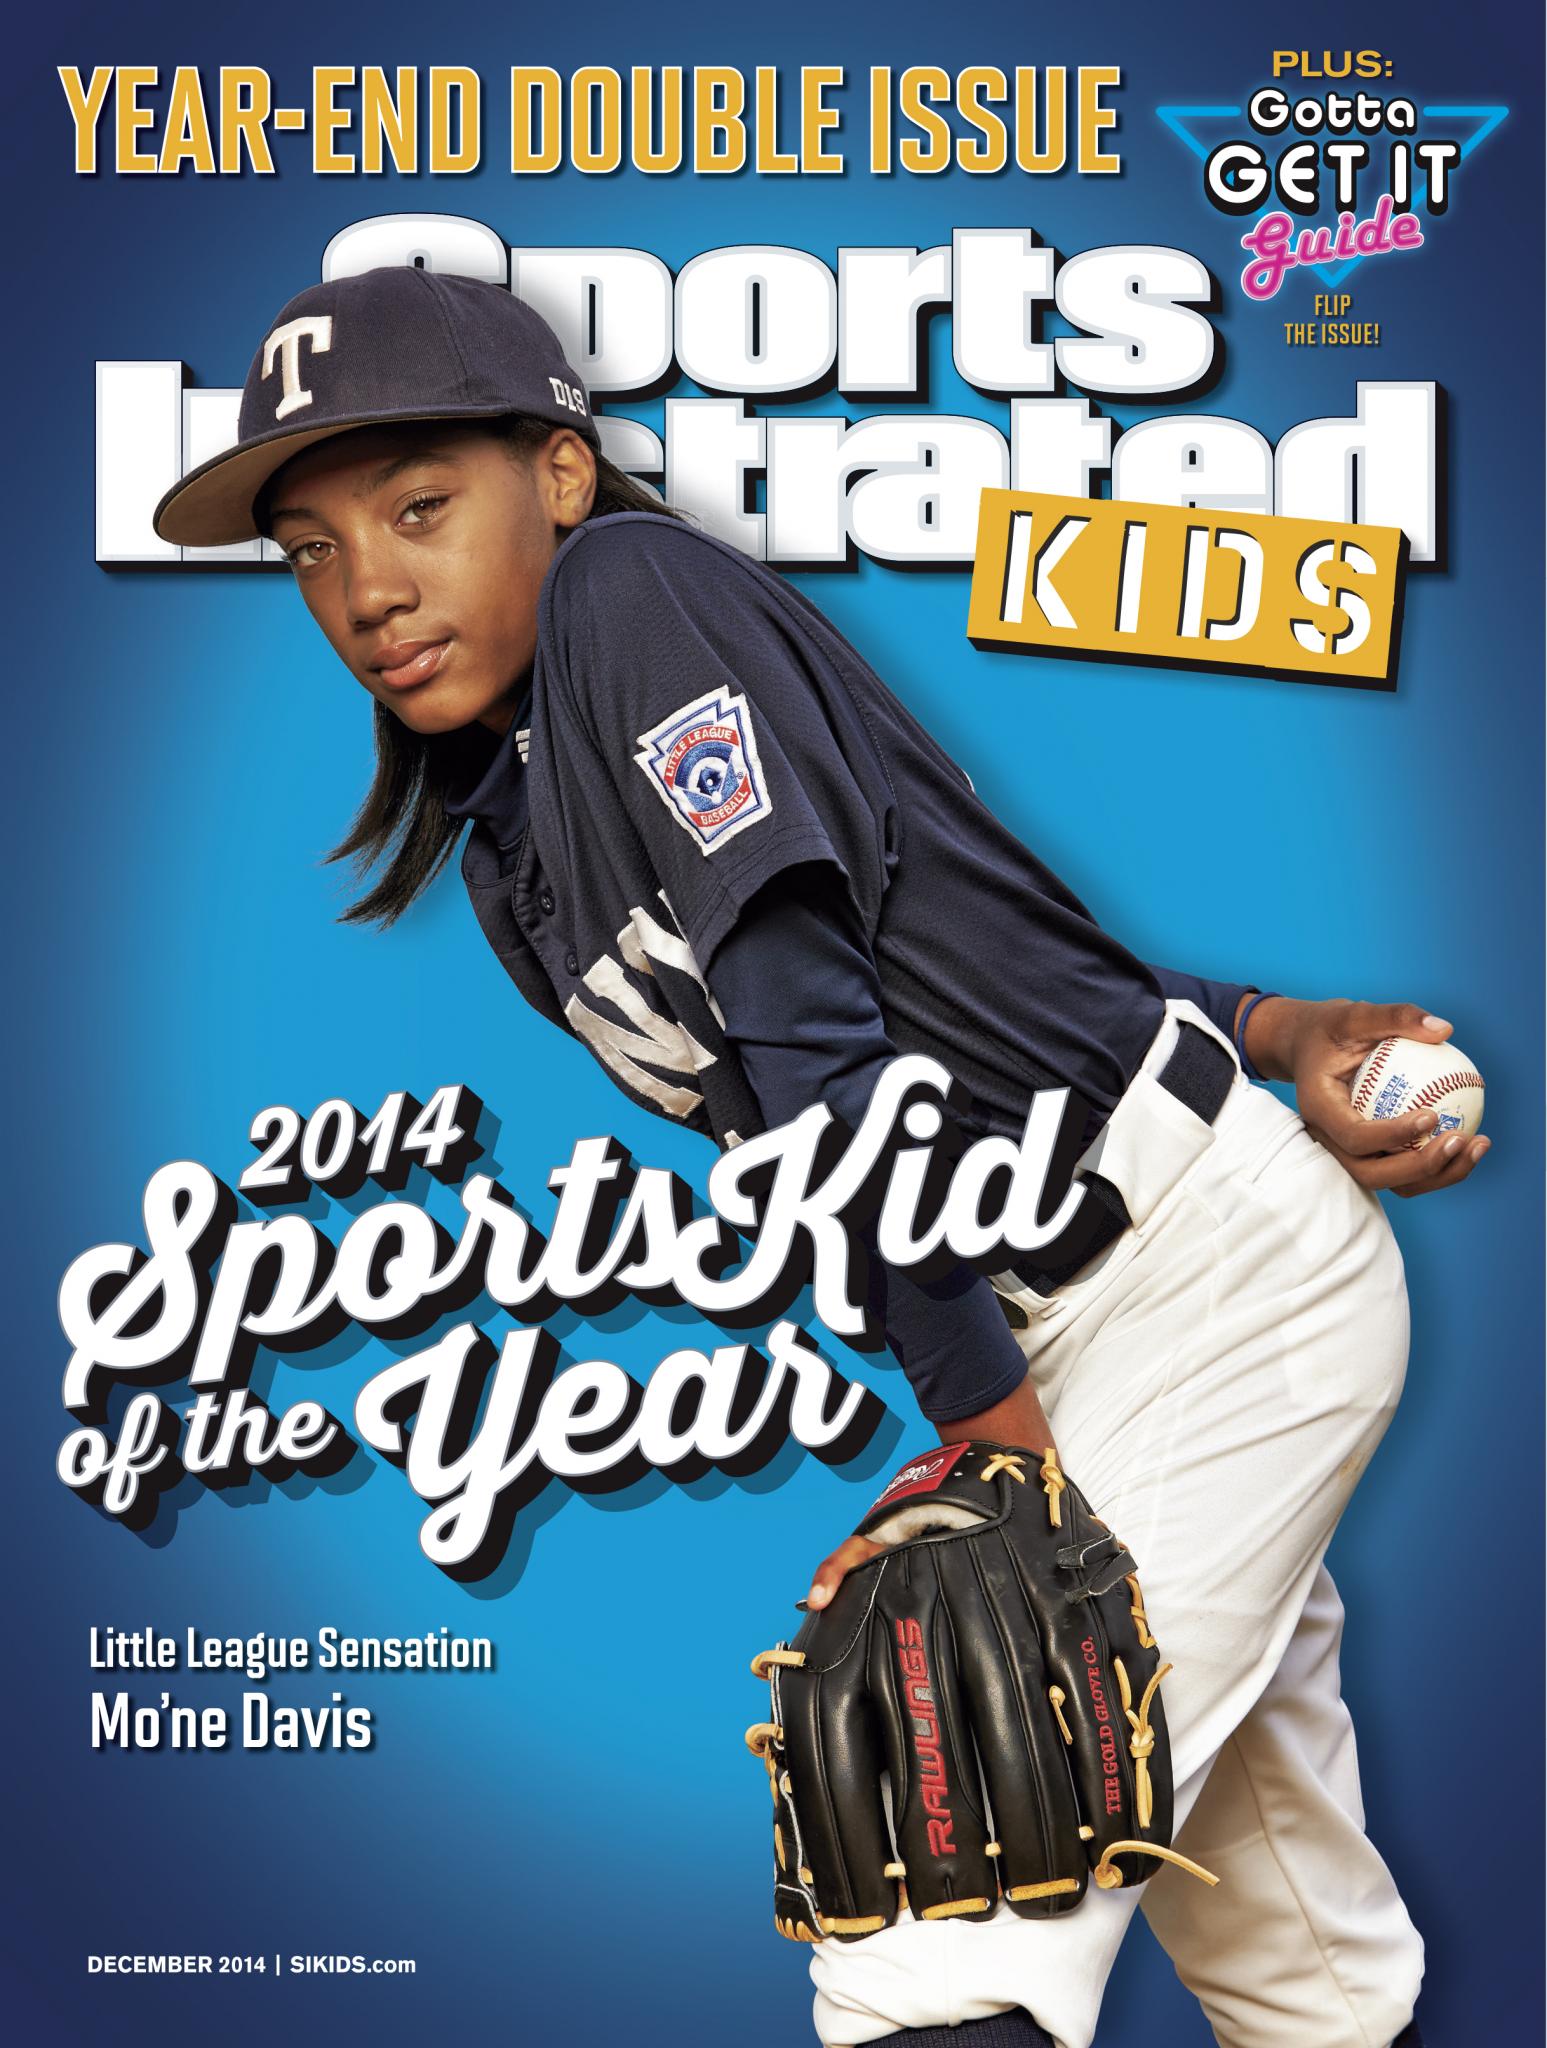 Mo'ne Davis Is 'Sports Illustrated Kids' SportsKid of the Year!